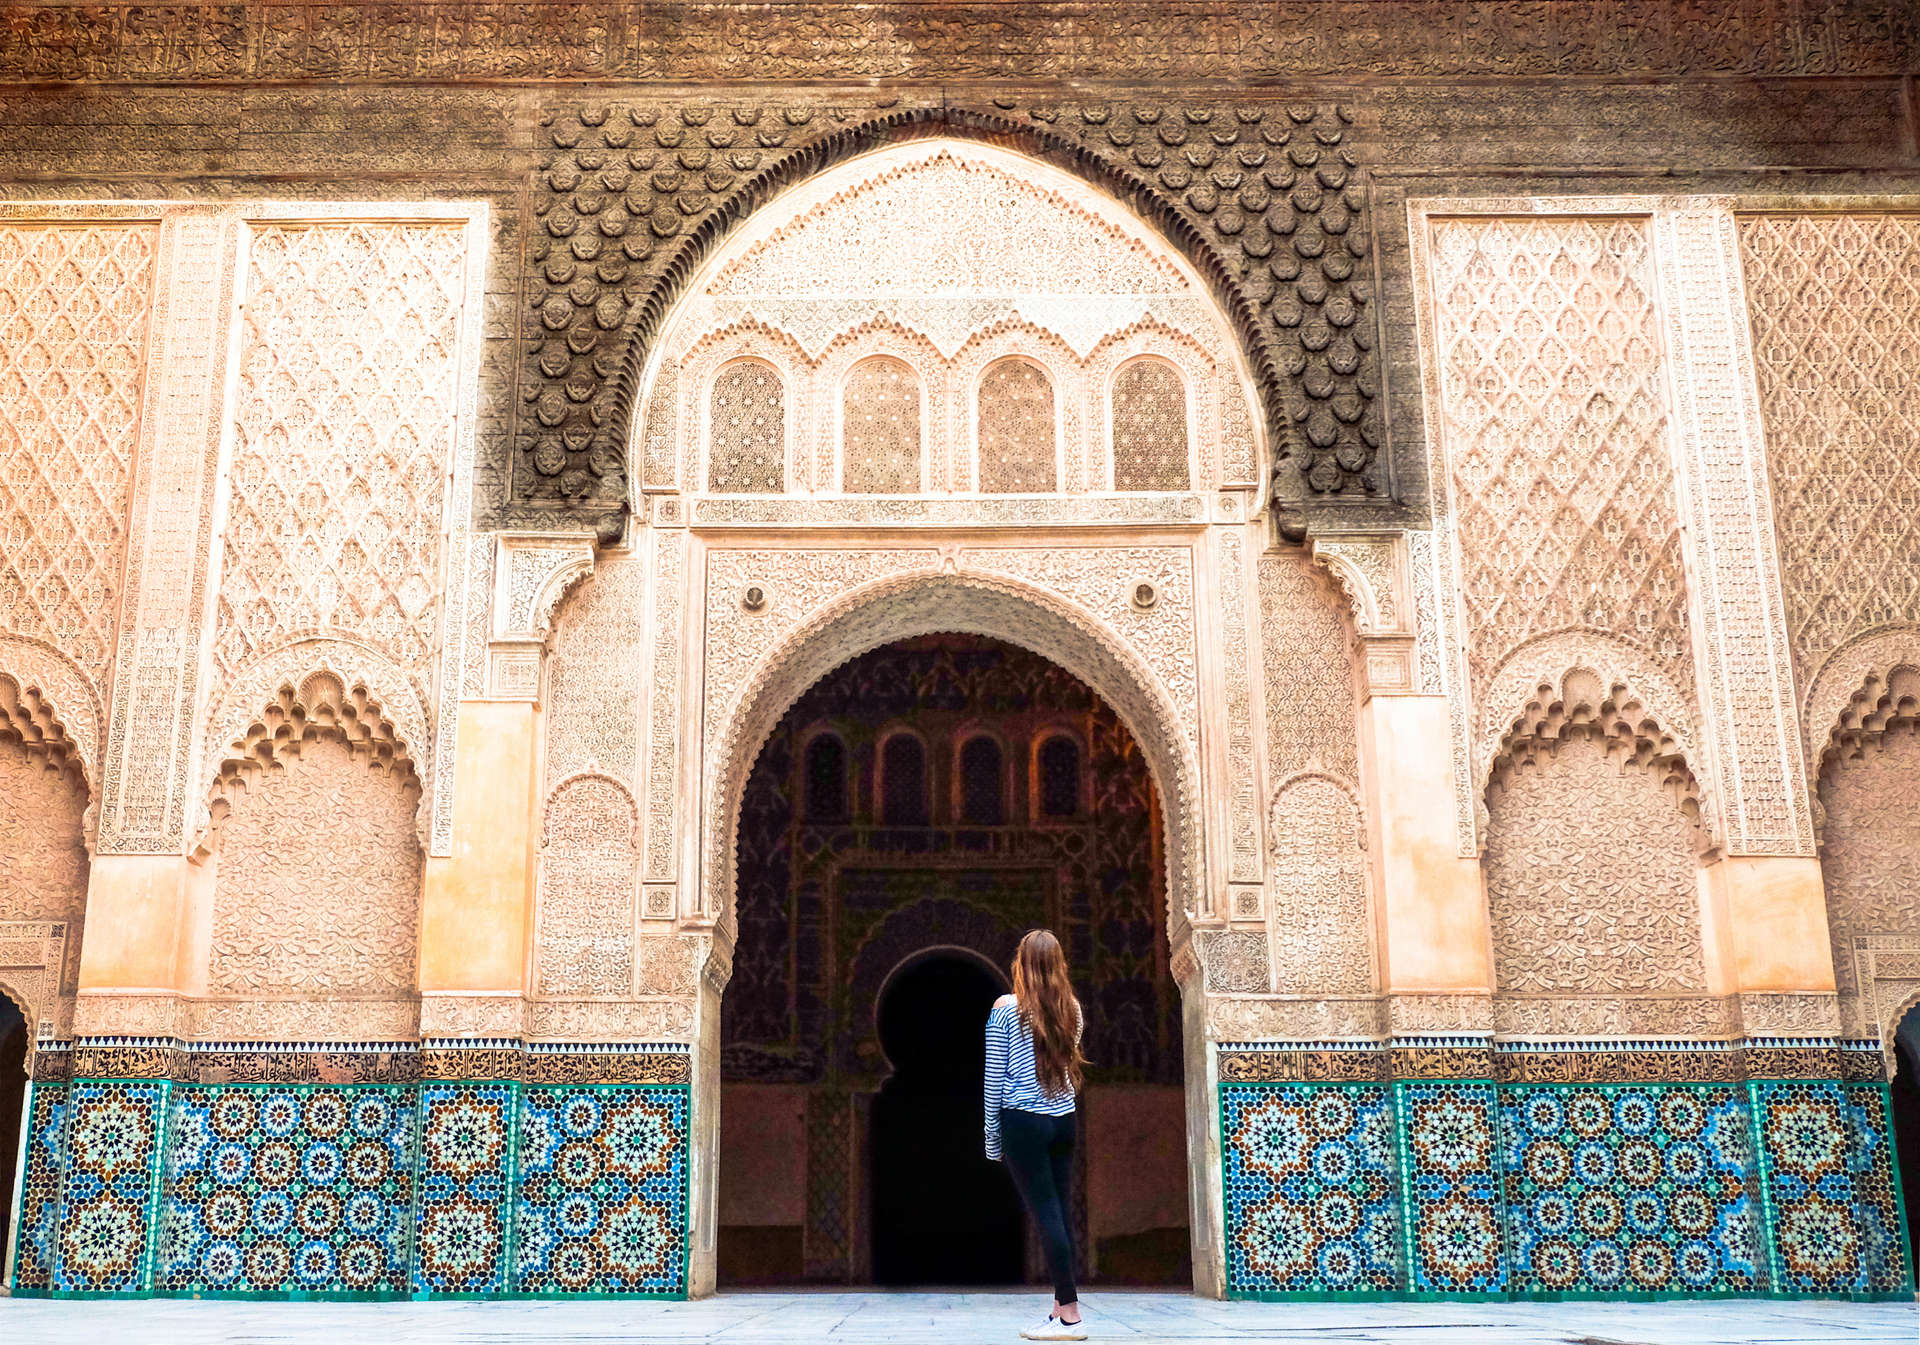 Marrakech is a lively destination with its souks, cafés and historic buildings